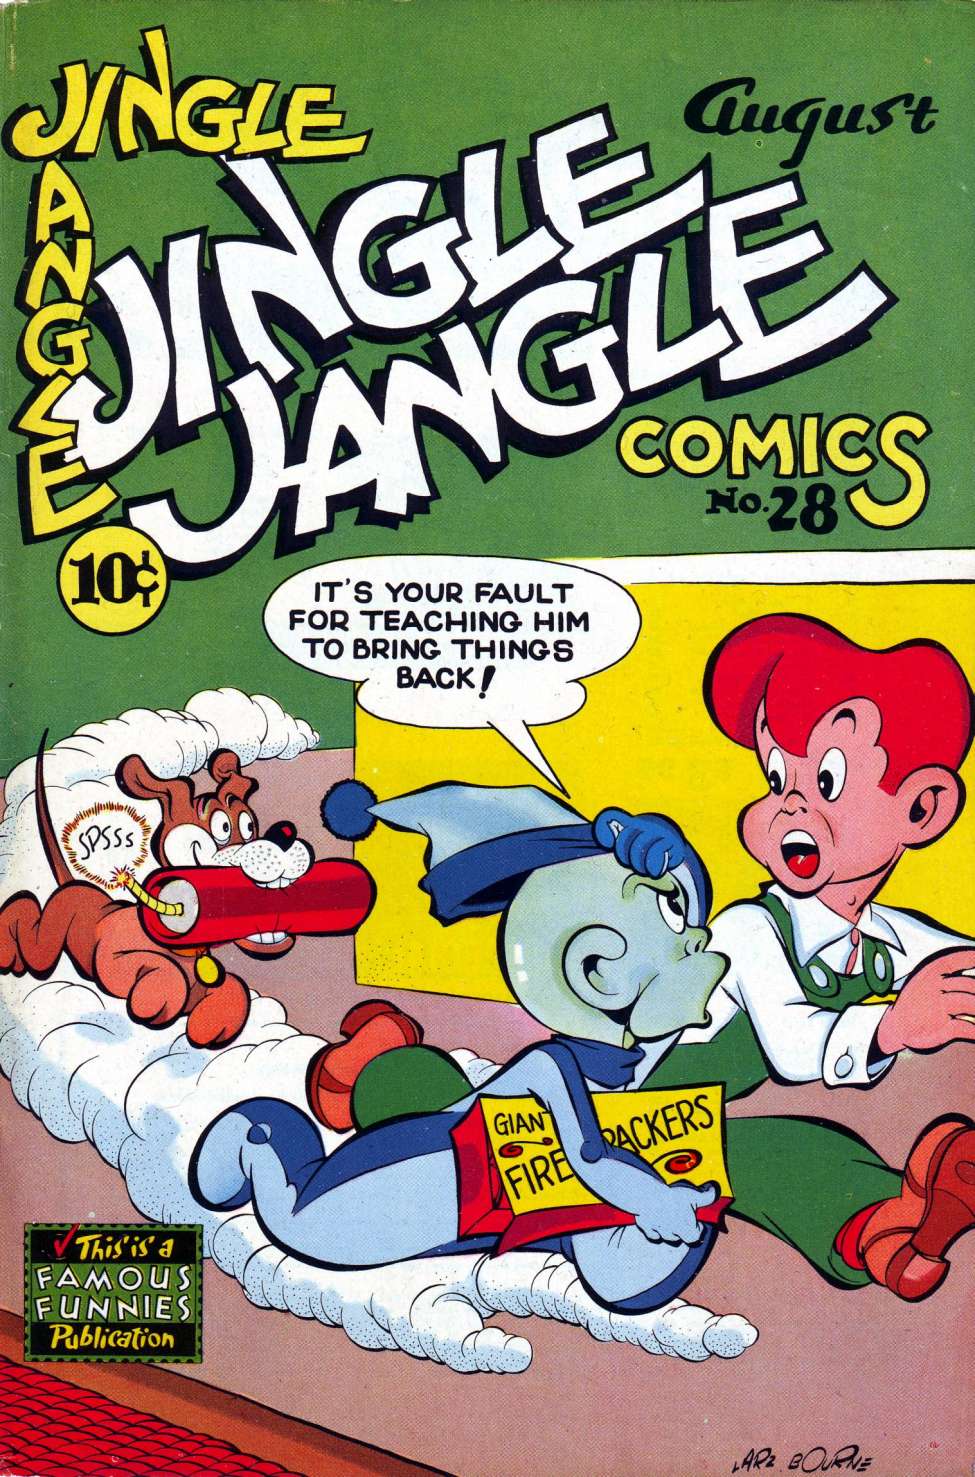 Book Cover For Jingle Jangle Comics 28